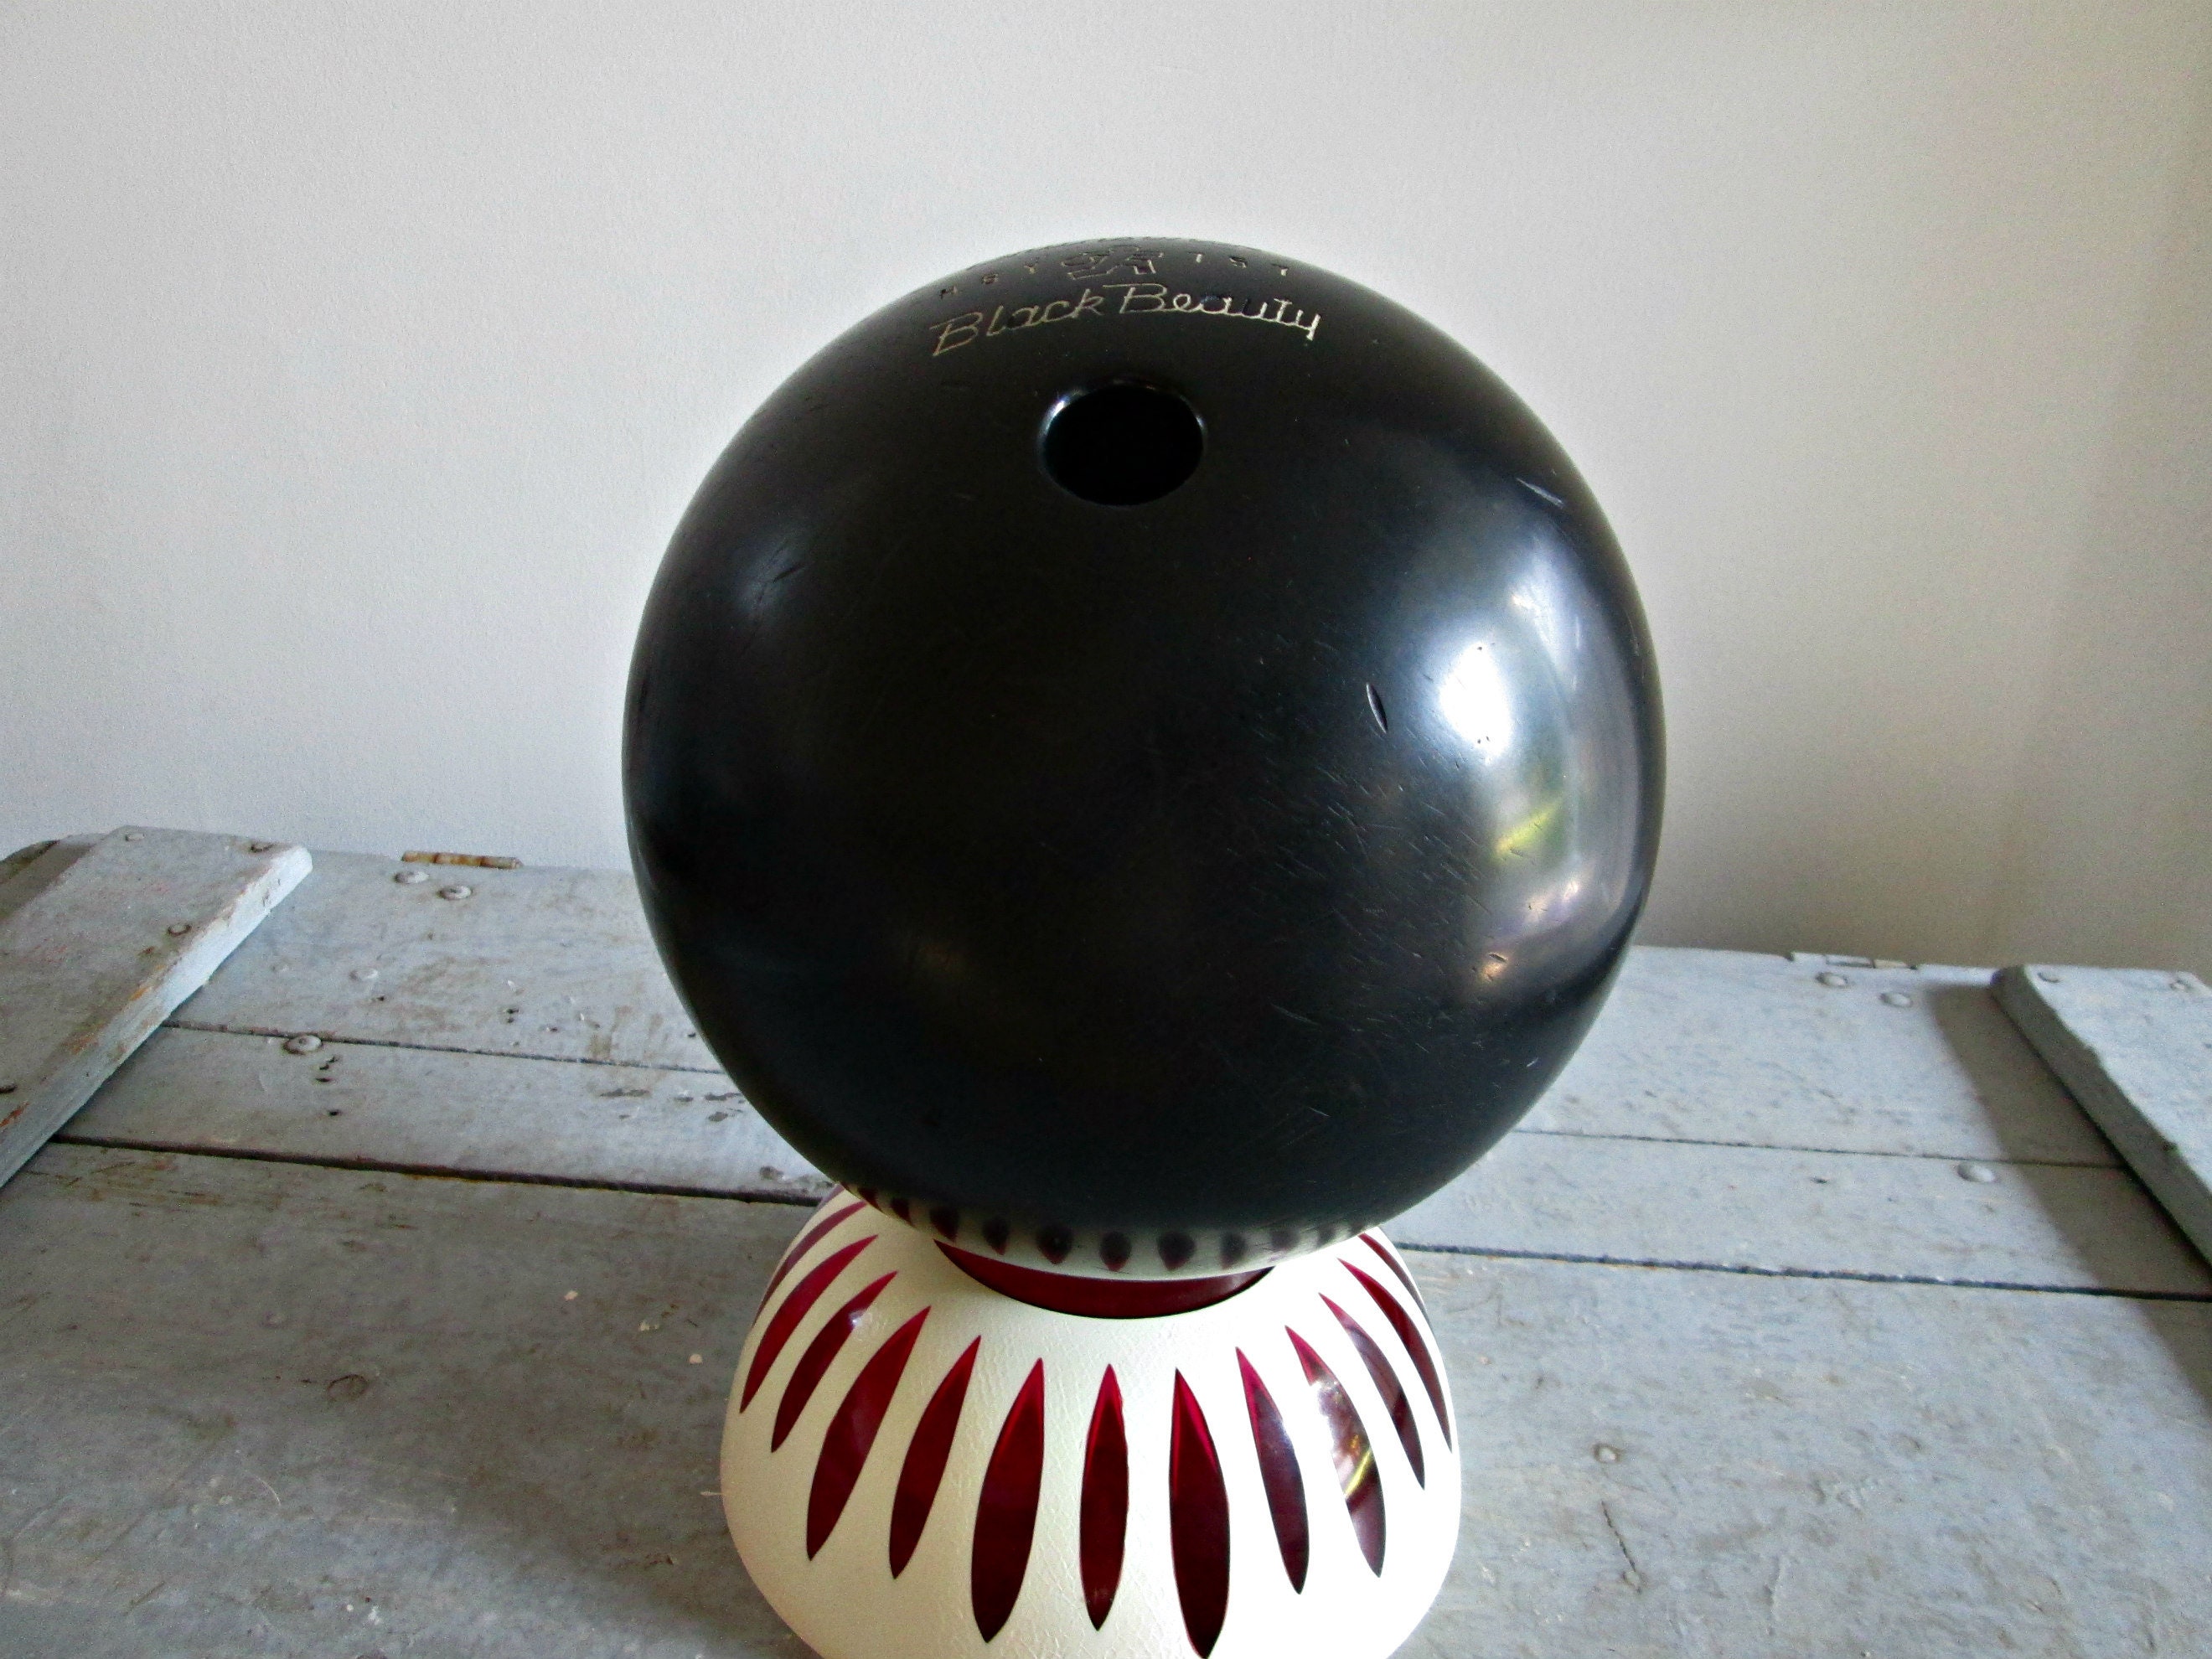 Mavin  Vintage Brunswick Black Beauty Bowling Ball With Bag!